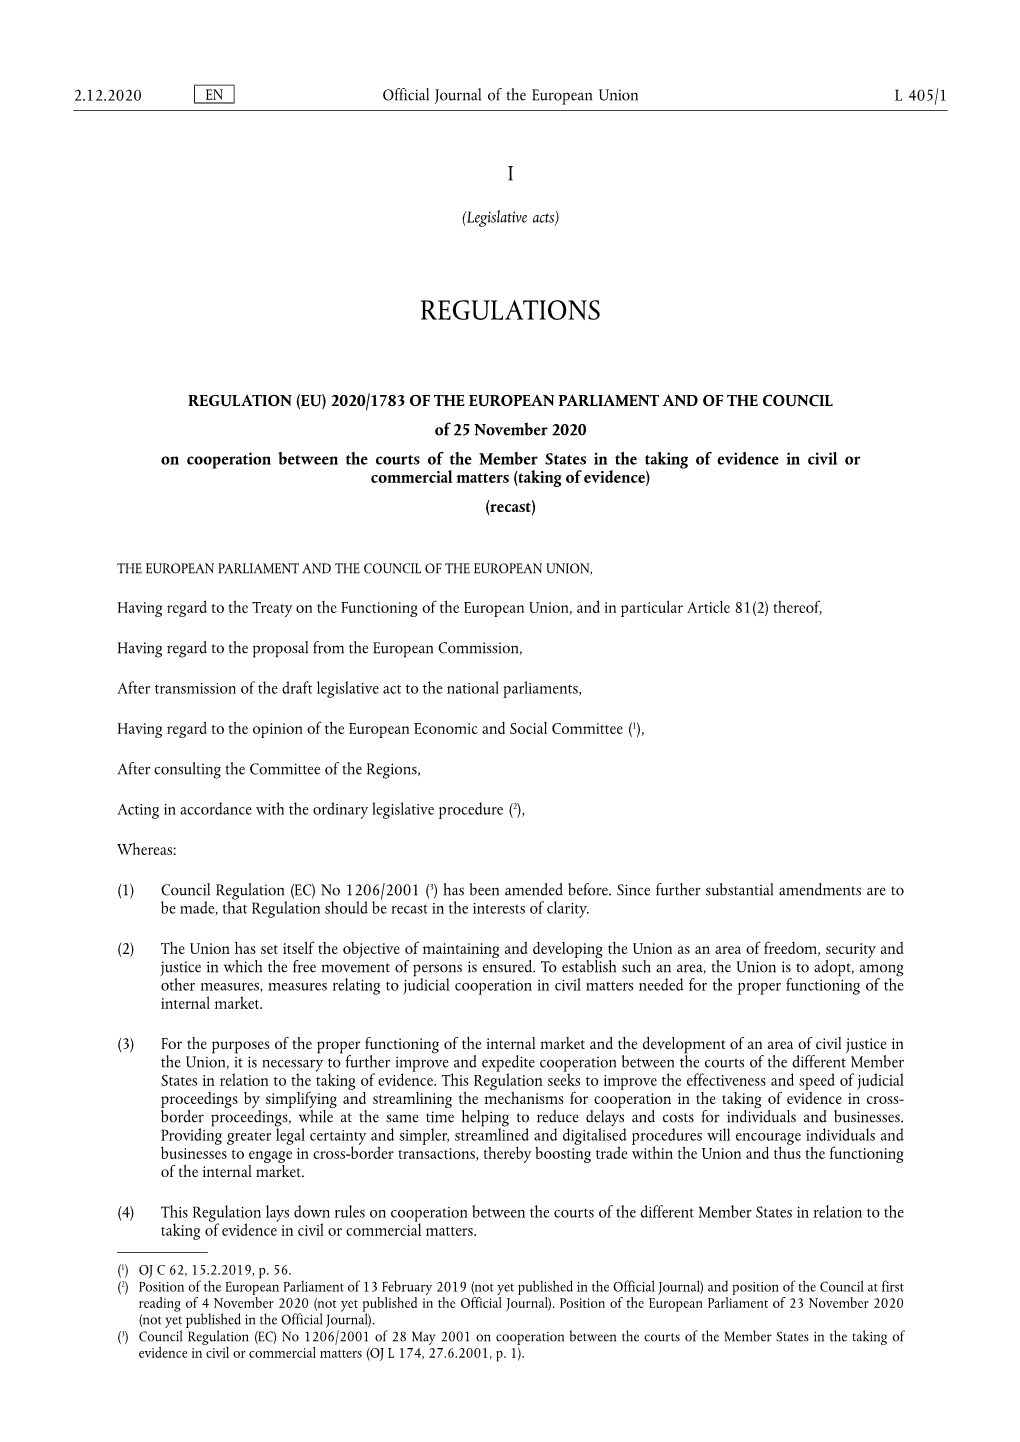 Regulation (EU) 2020/1783 of the European Parliament